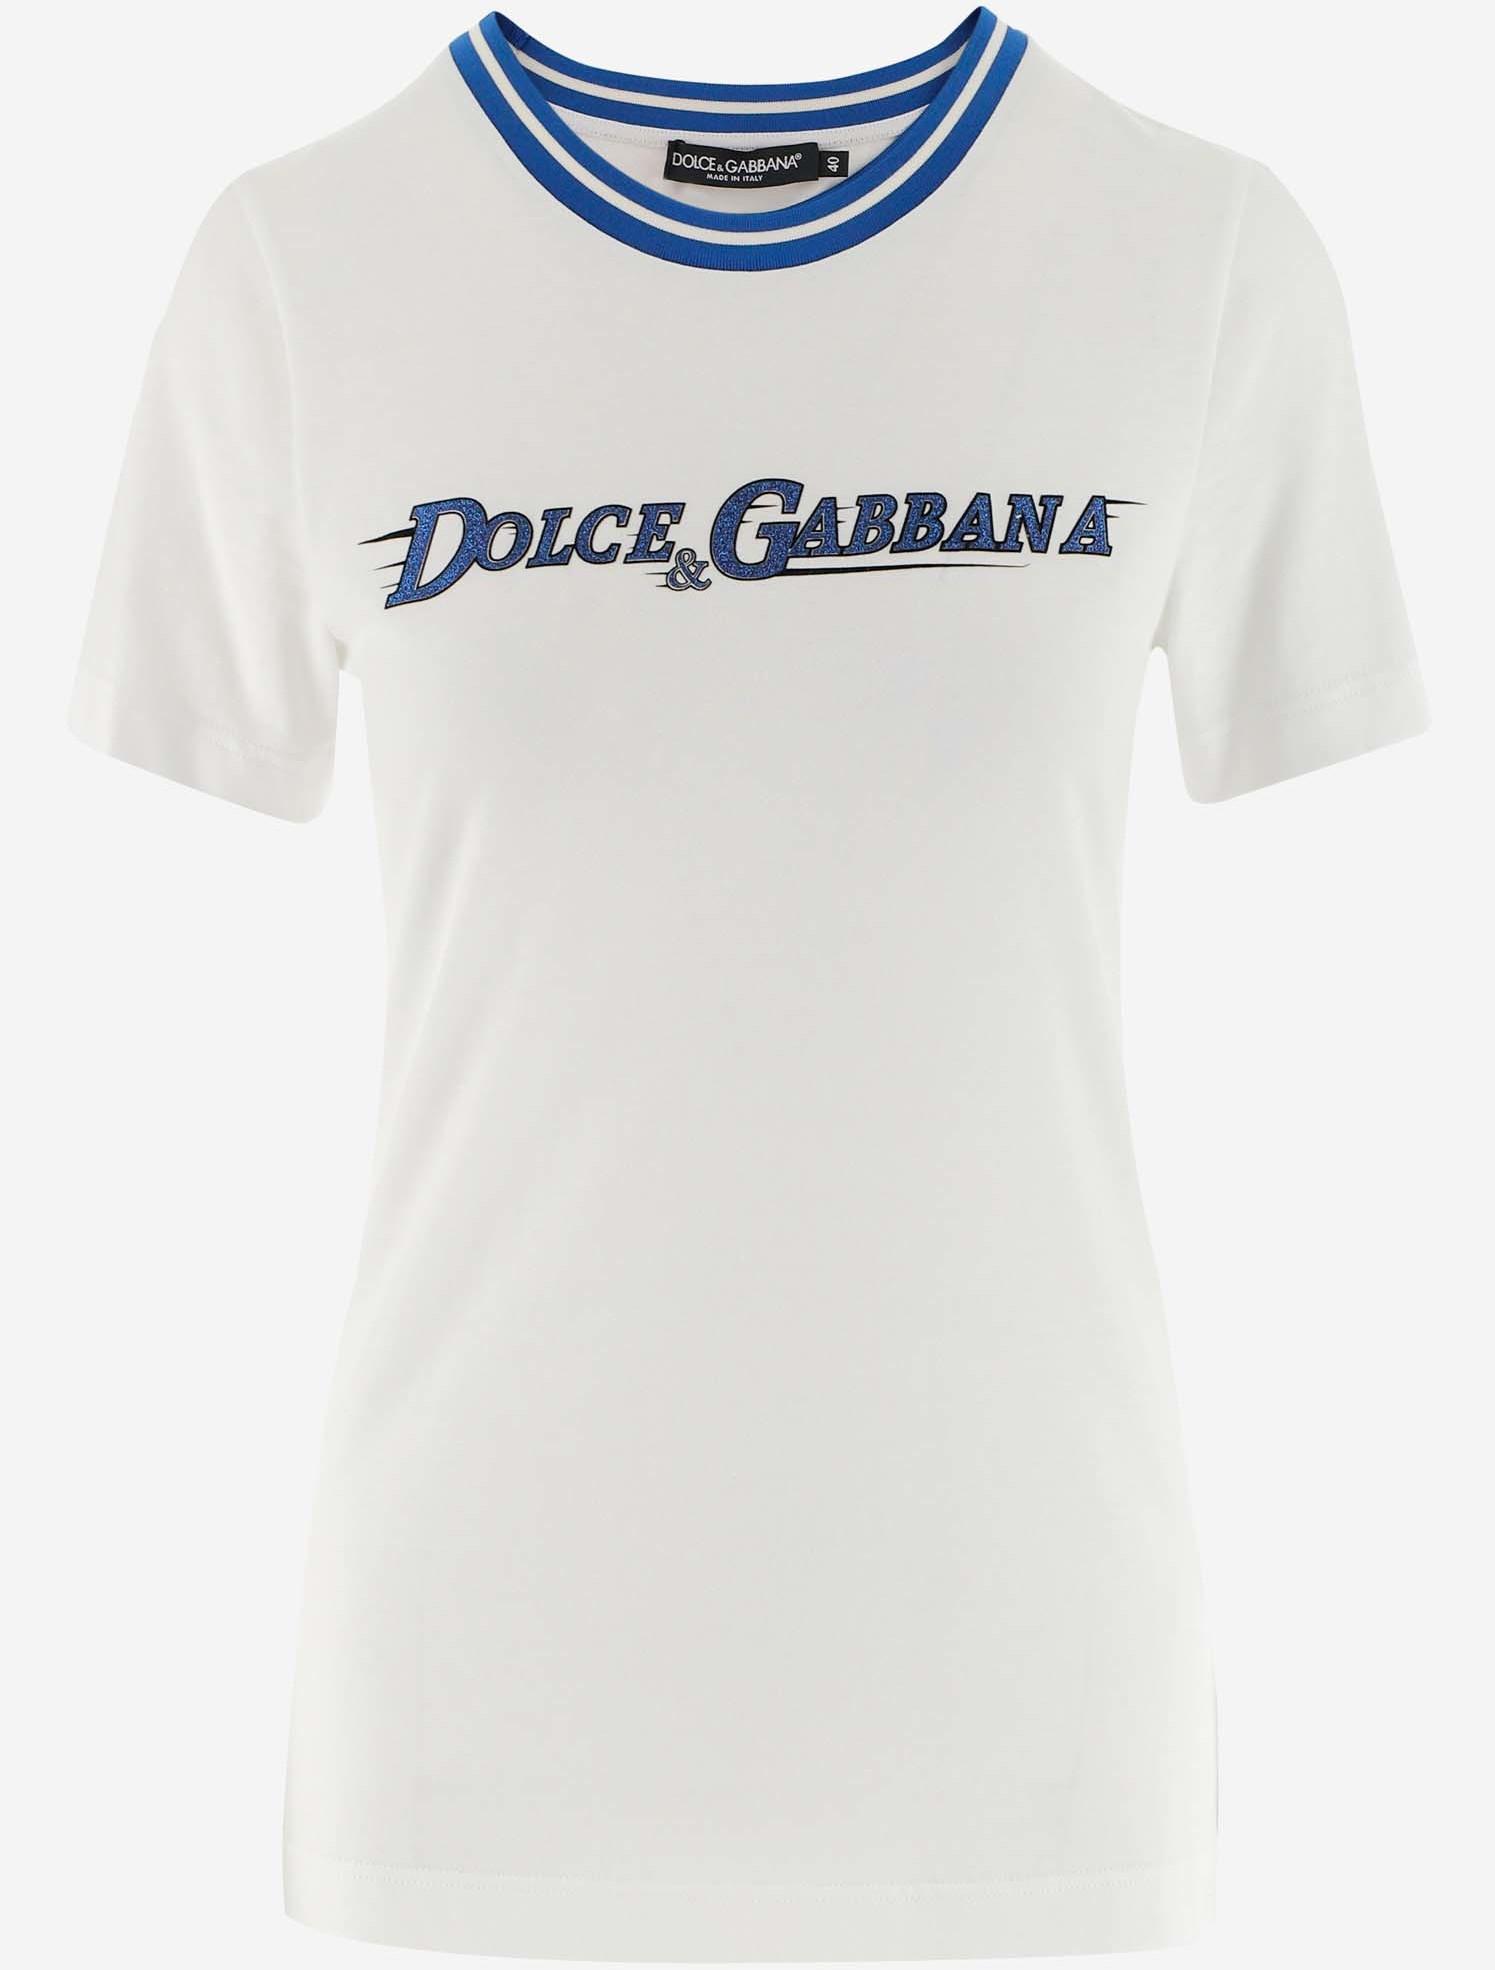 womens dolce and gabbana t shirt